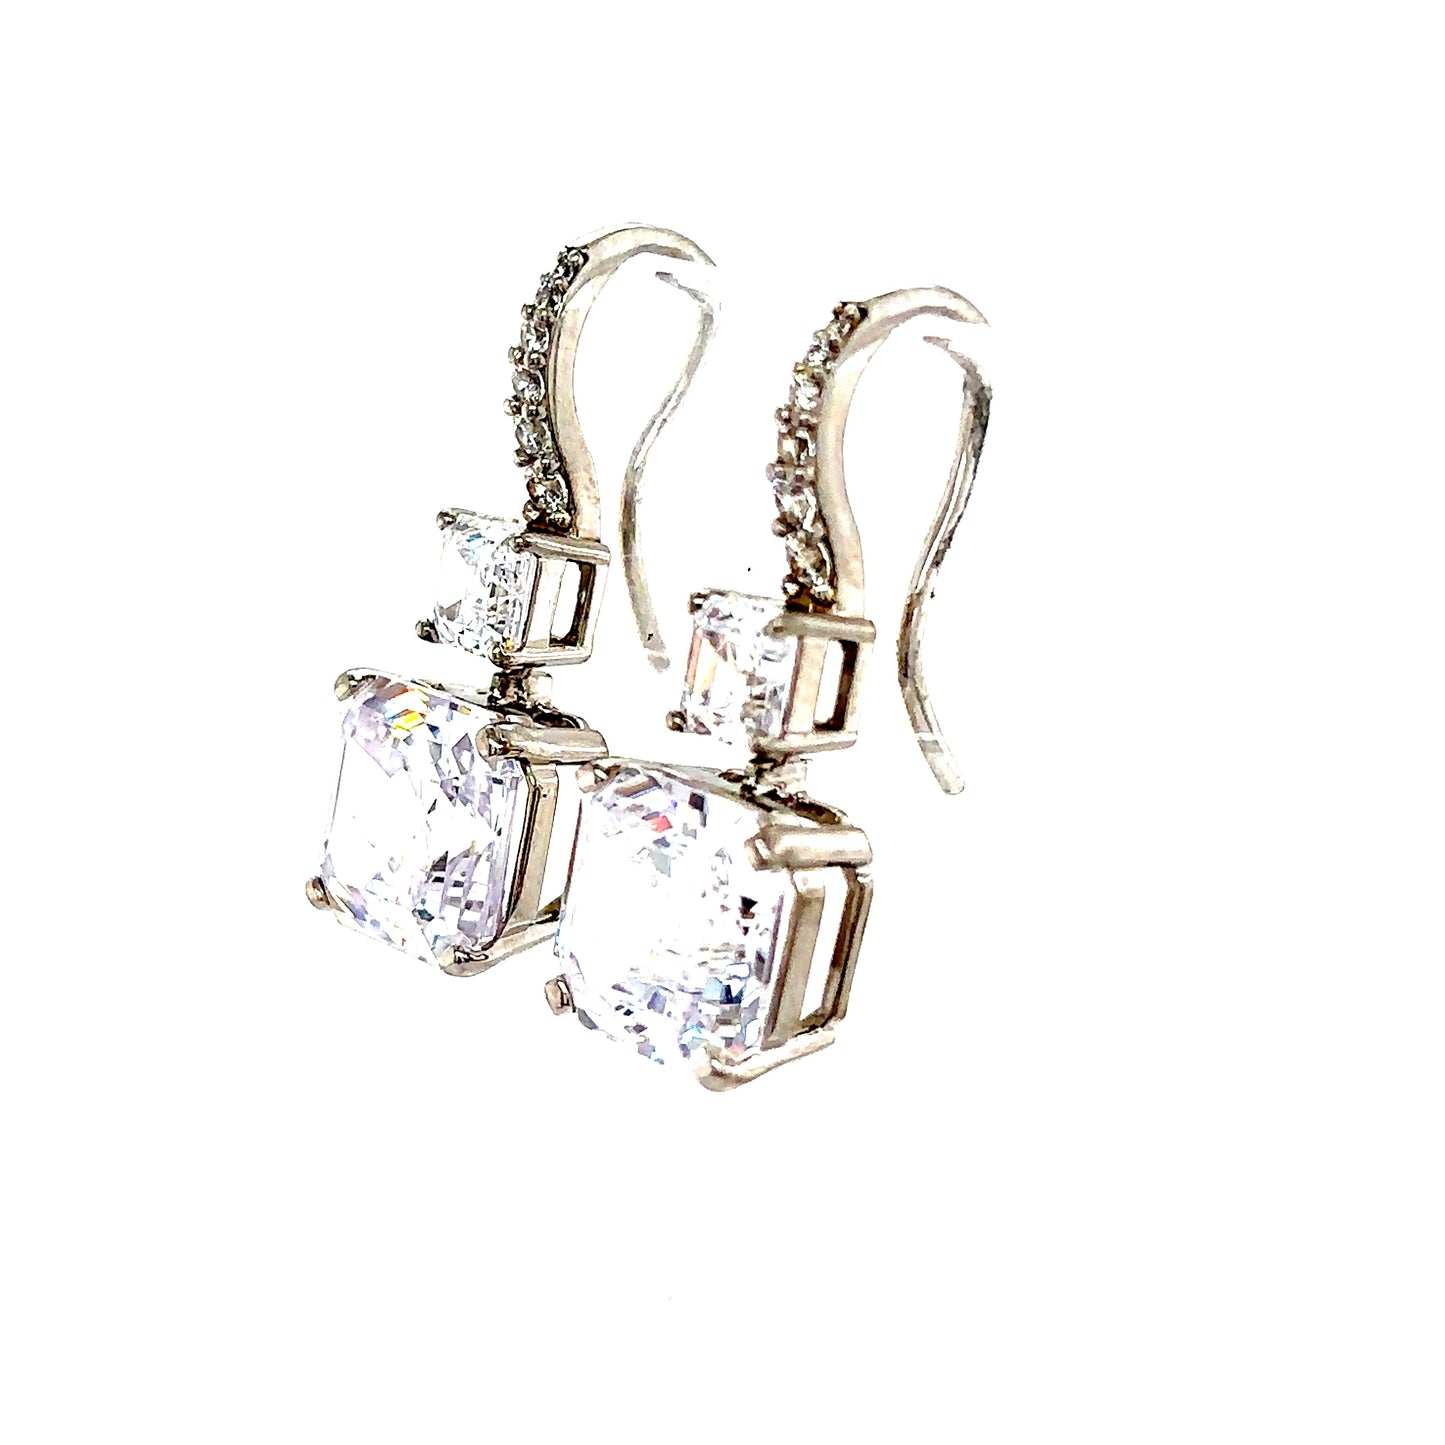 925 S.S. Swarovski Crystal Dangle Earrings